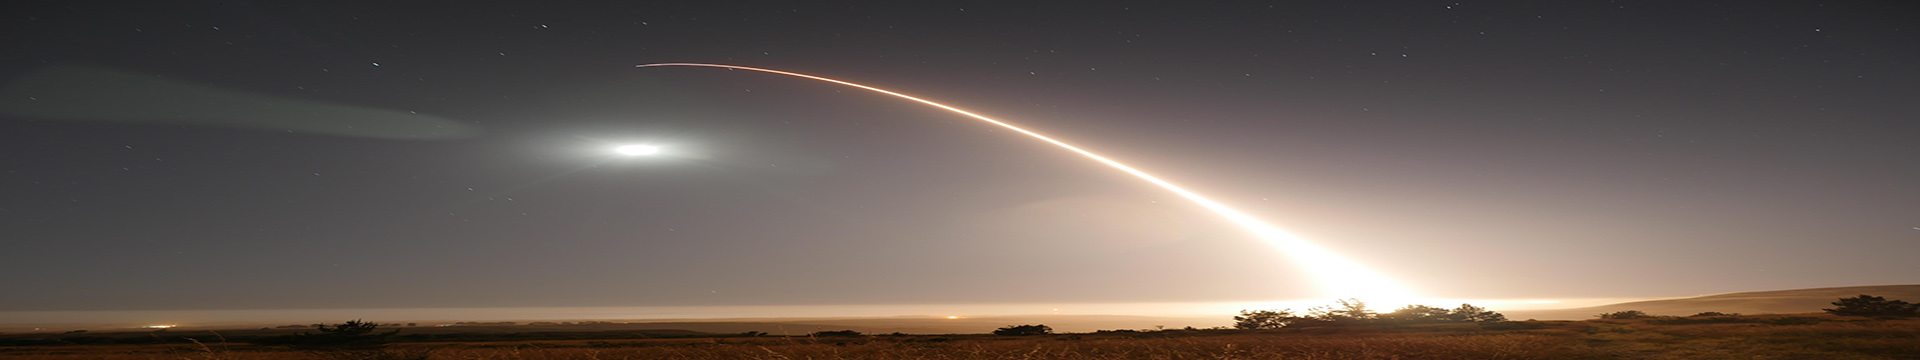 Test launch of the Minuteman III, shining light in the dark sky.